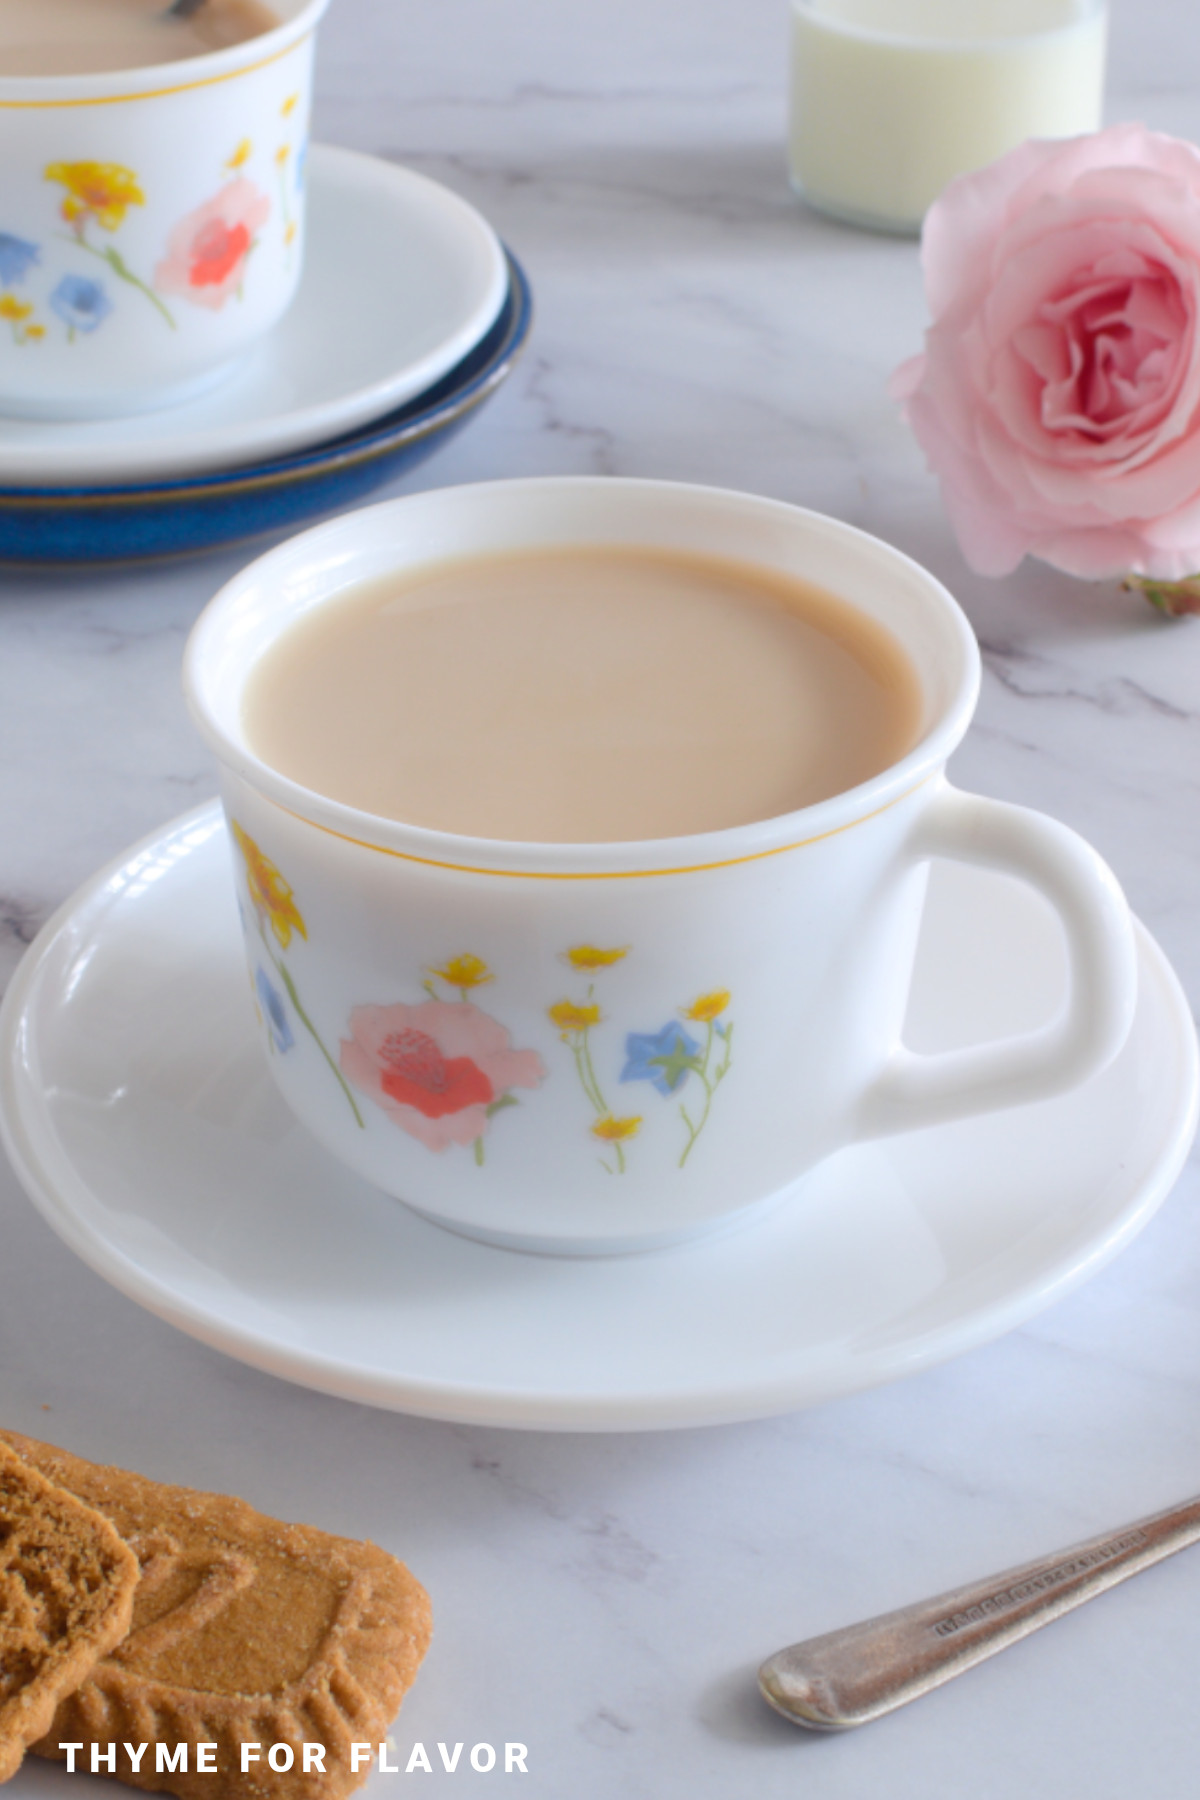 Earl grey tea with milk in a white mug.